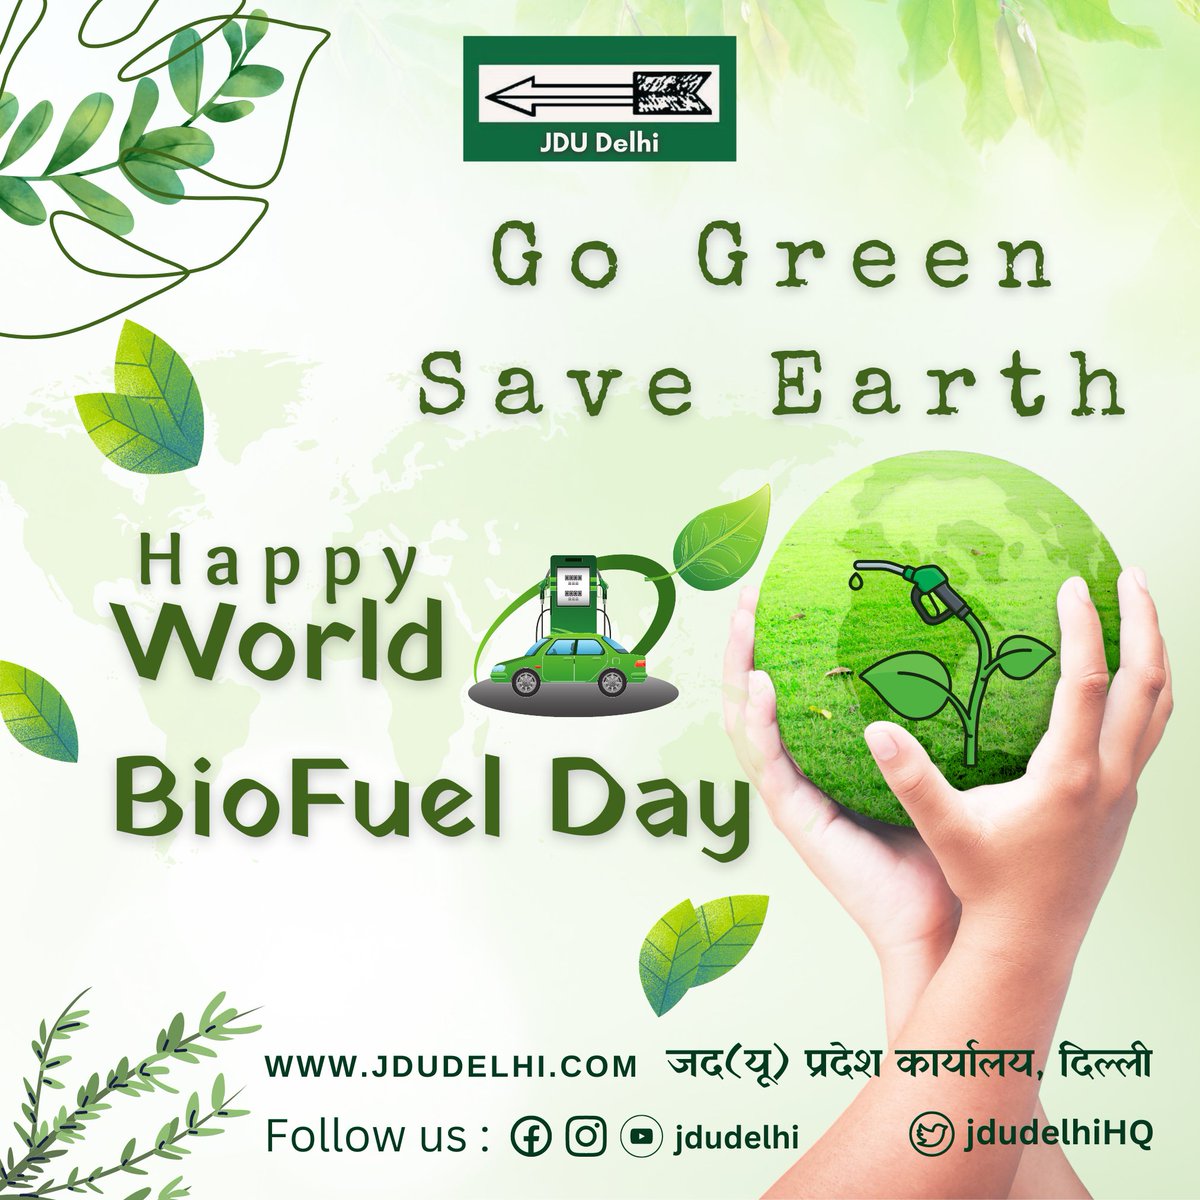 Go Green | Save Earth
Happy World BioFuel Day

#WorldBiofuelDay #WorldBiofuelDay2023 #JDU